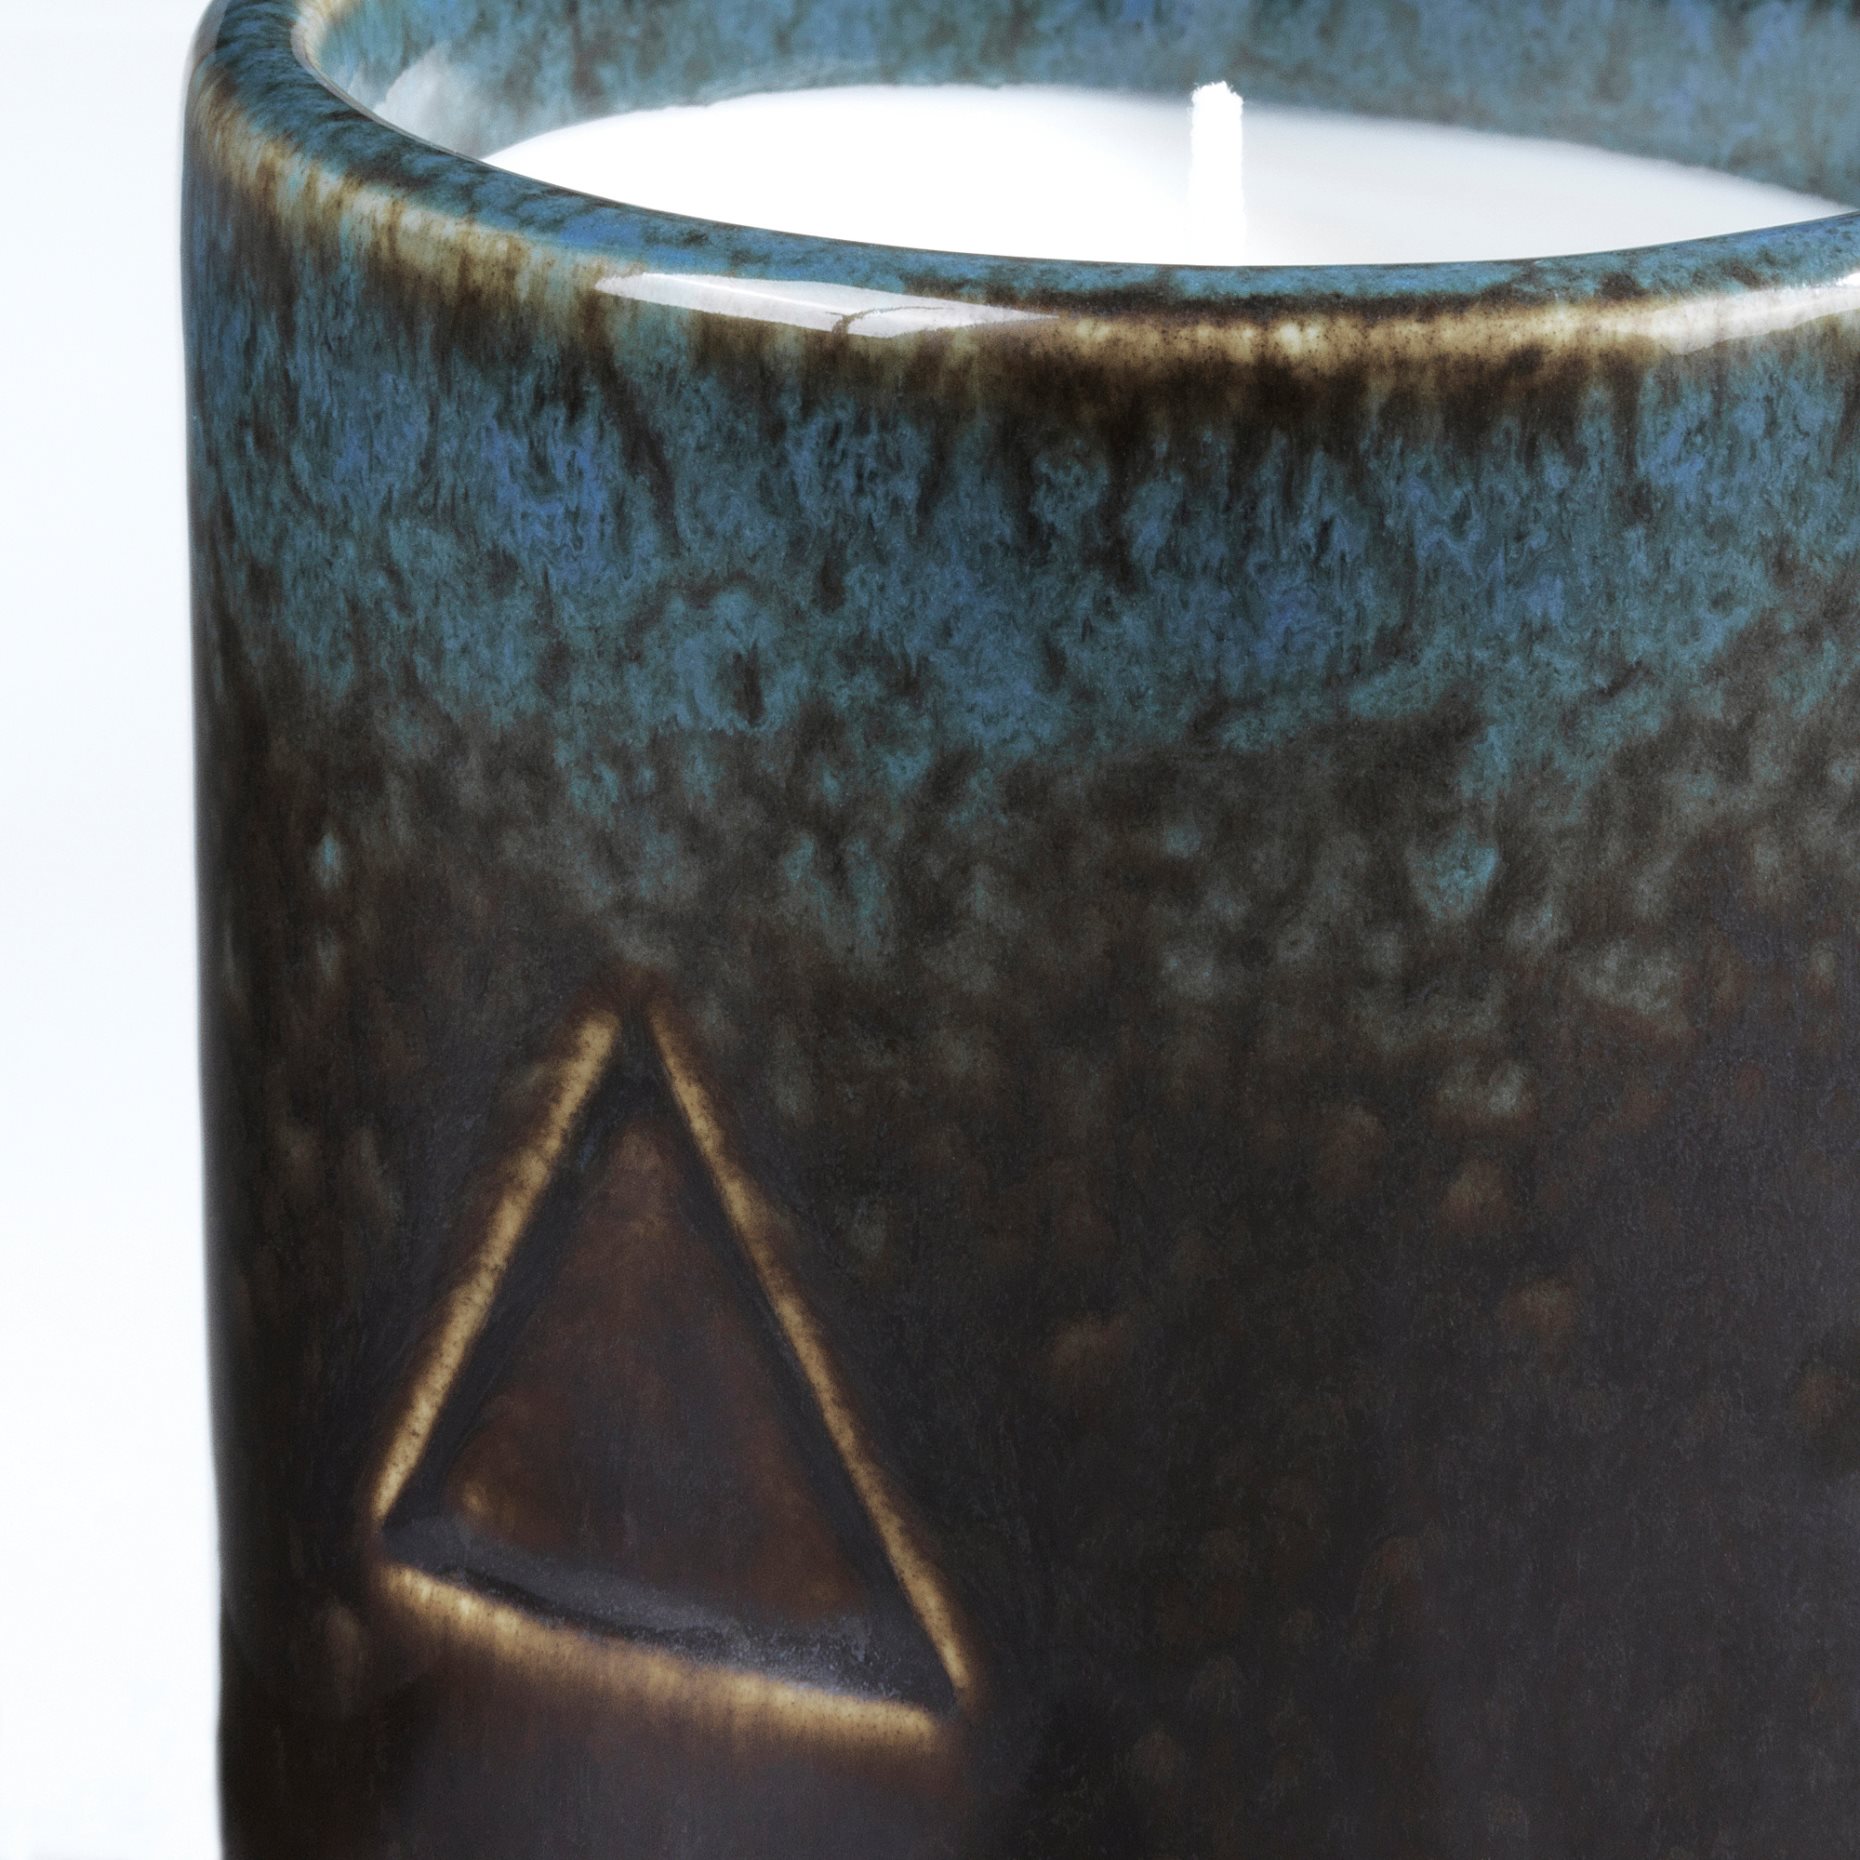 OSYNLIG, scented candle in pot/Tobacco & Honey, 7 cm, 604.485.87